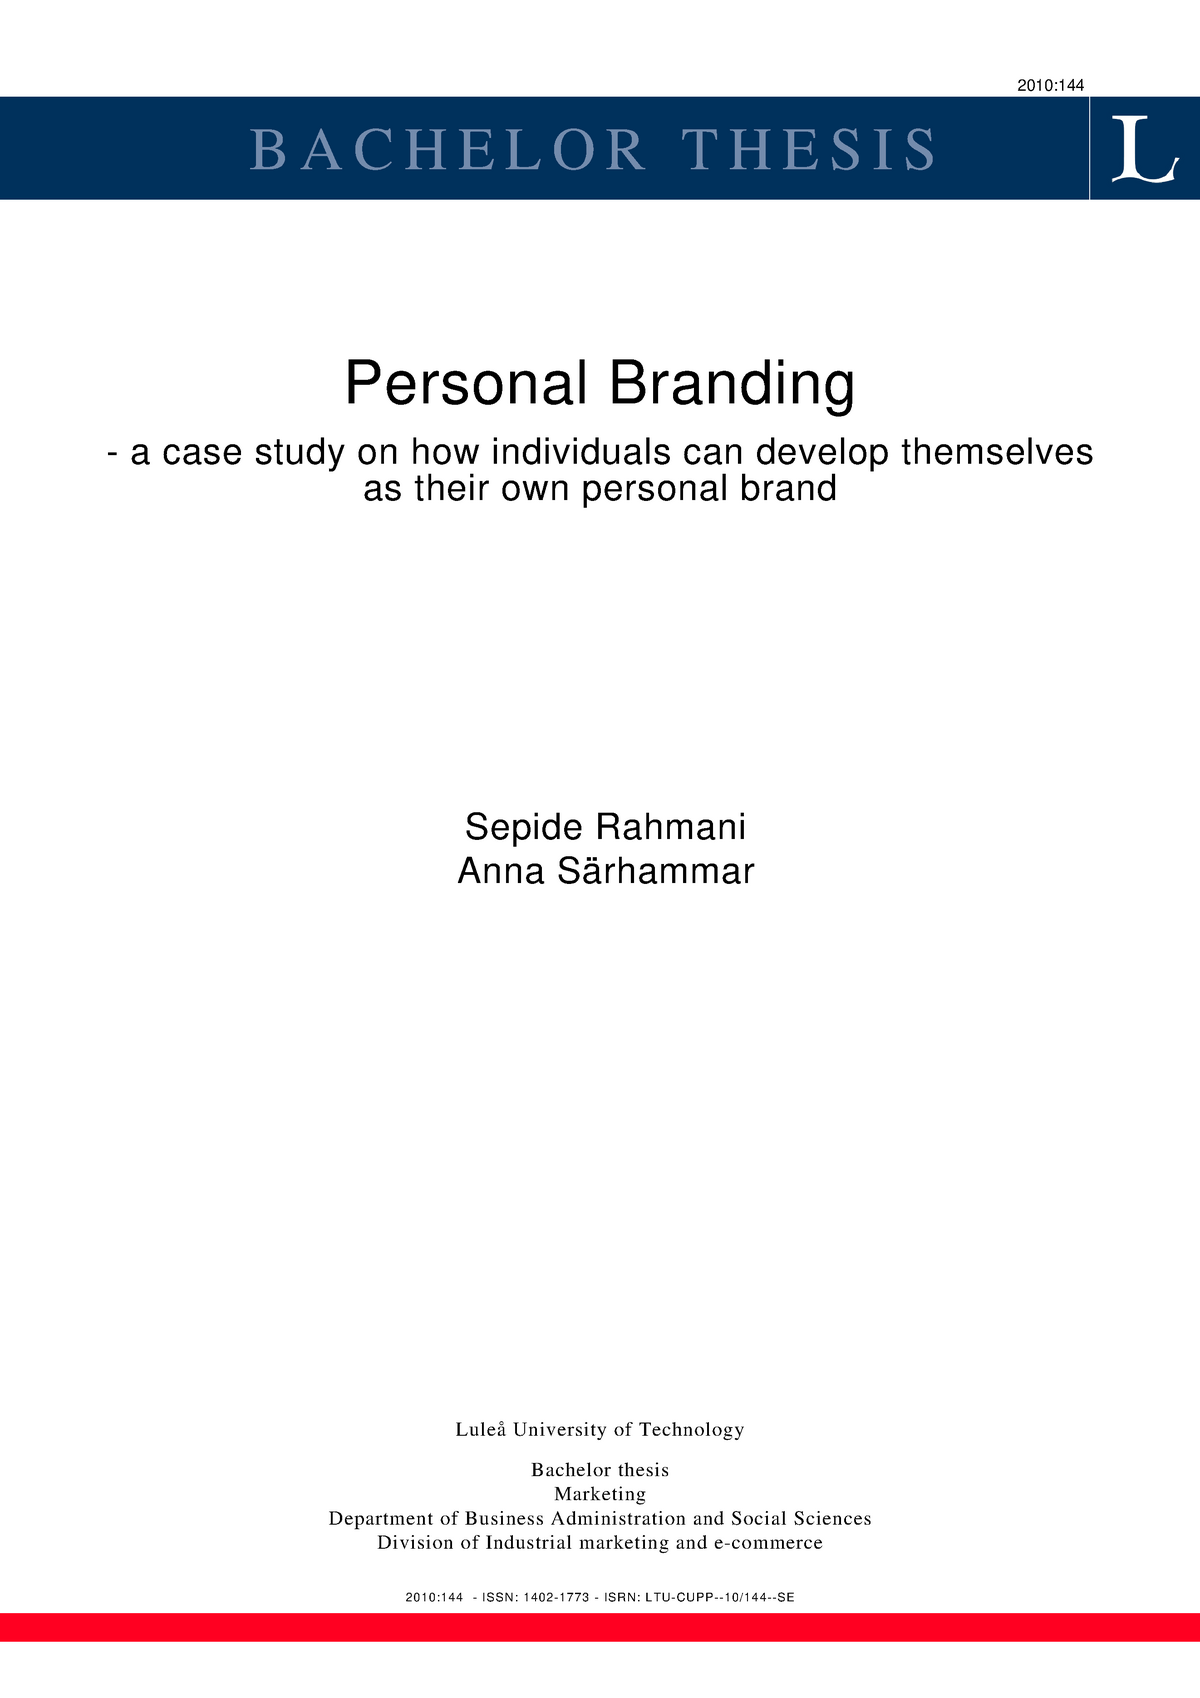 personal branding dissertation